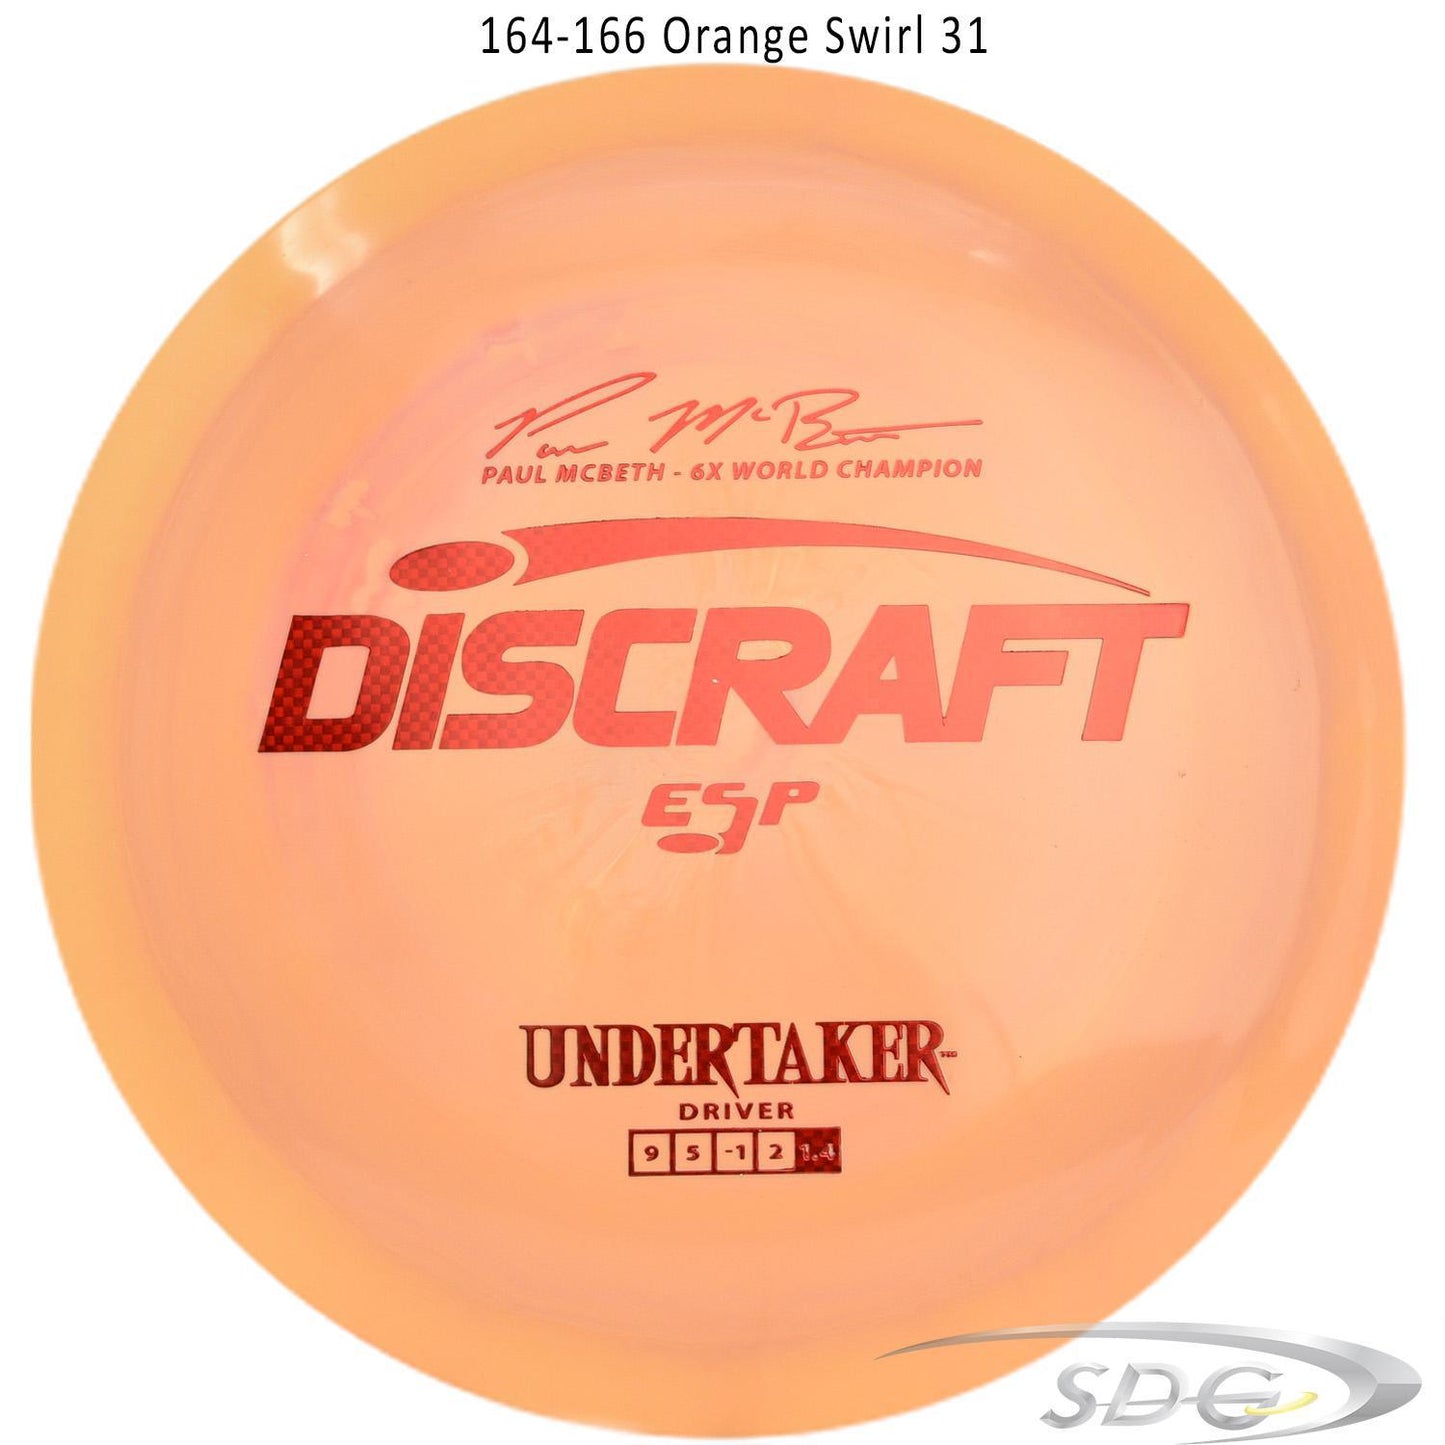 discraft-esp-undertaker-6x-paul-mcbeth-signature-series-disc-golf-distance-driver 164-166 Orange Swirl 31